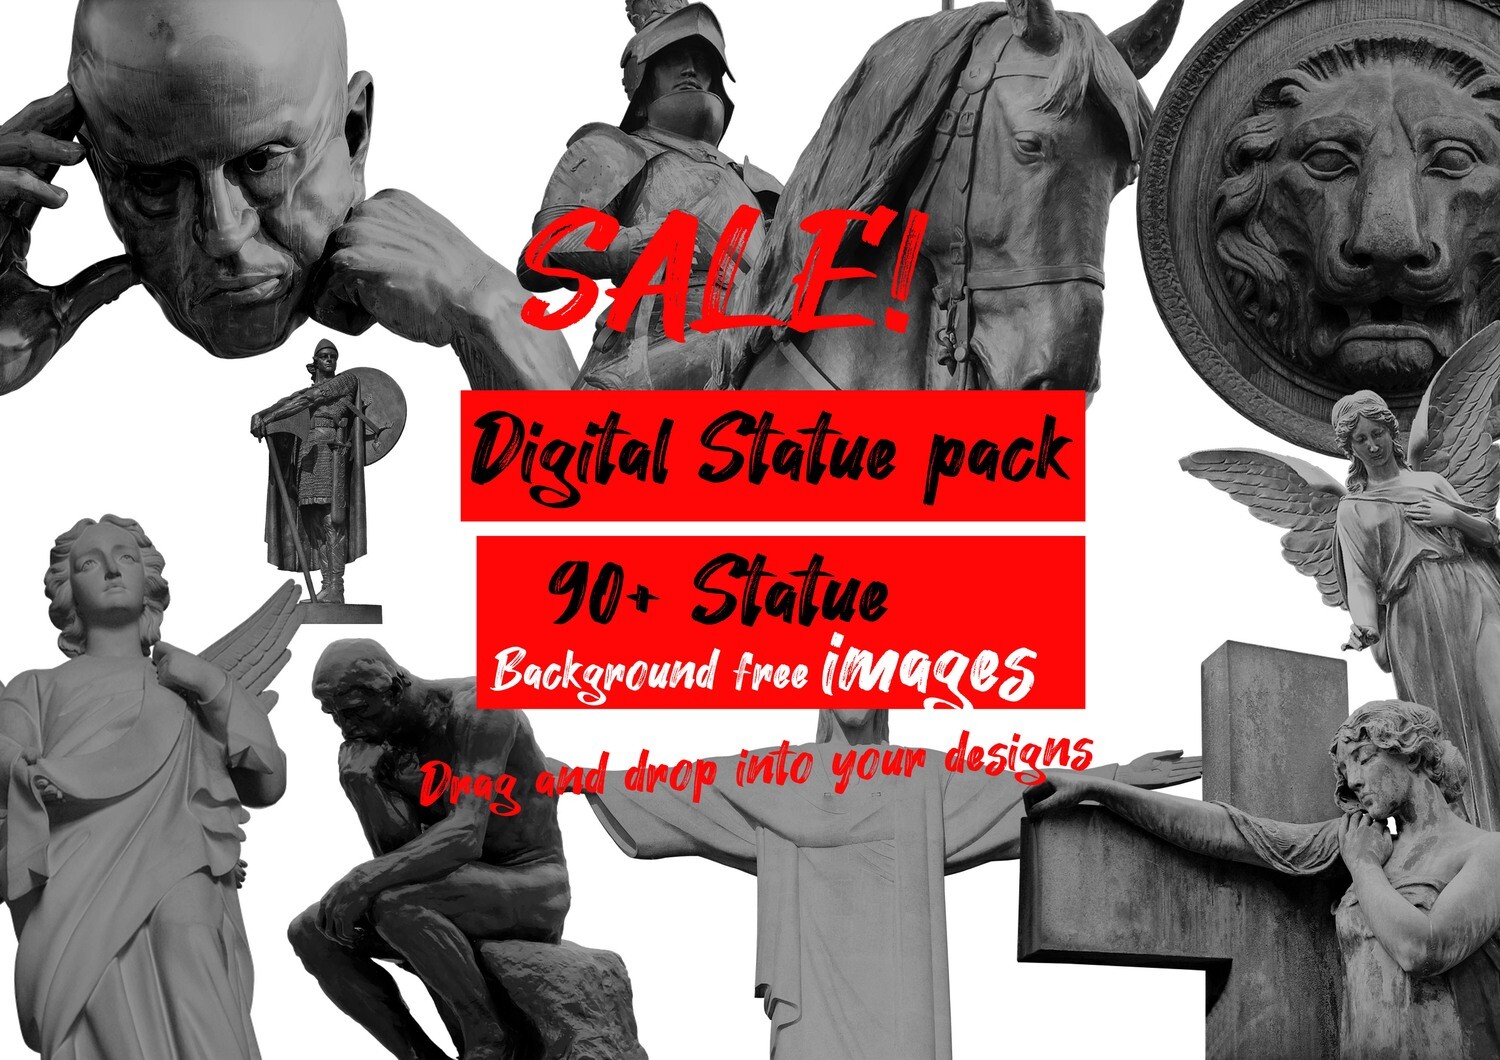 Digital statue pack 90+ images